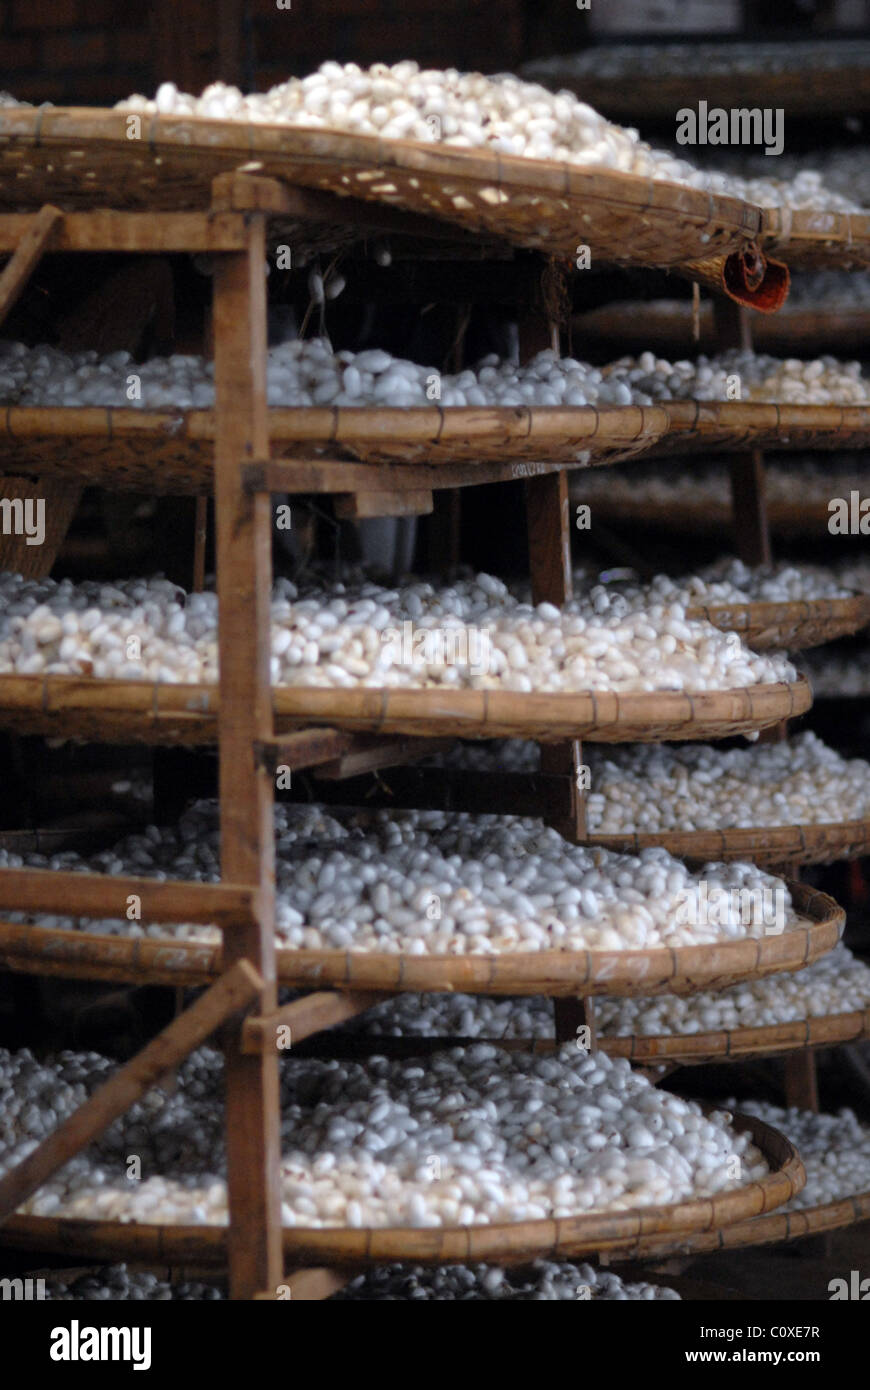 Many white silkworm cocoons, silk farming, Dalat capital, Central Highlands, Vietnam, Asia Stock Photo